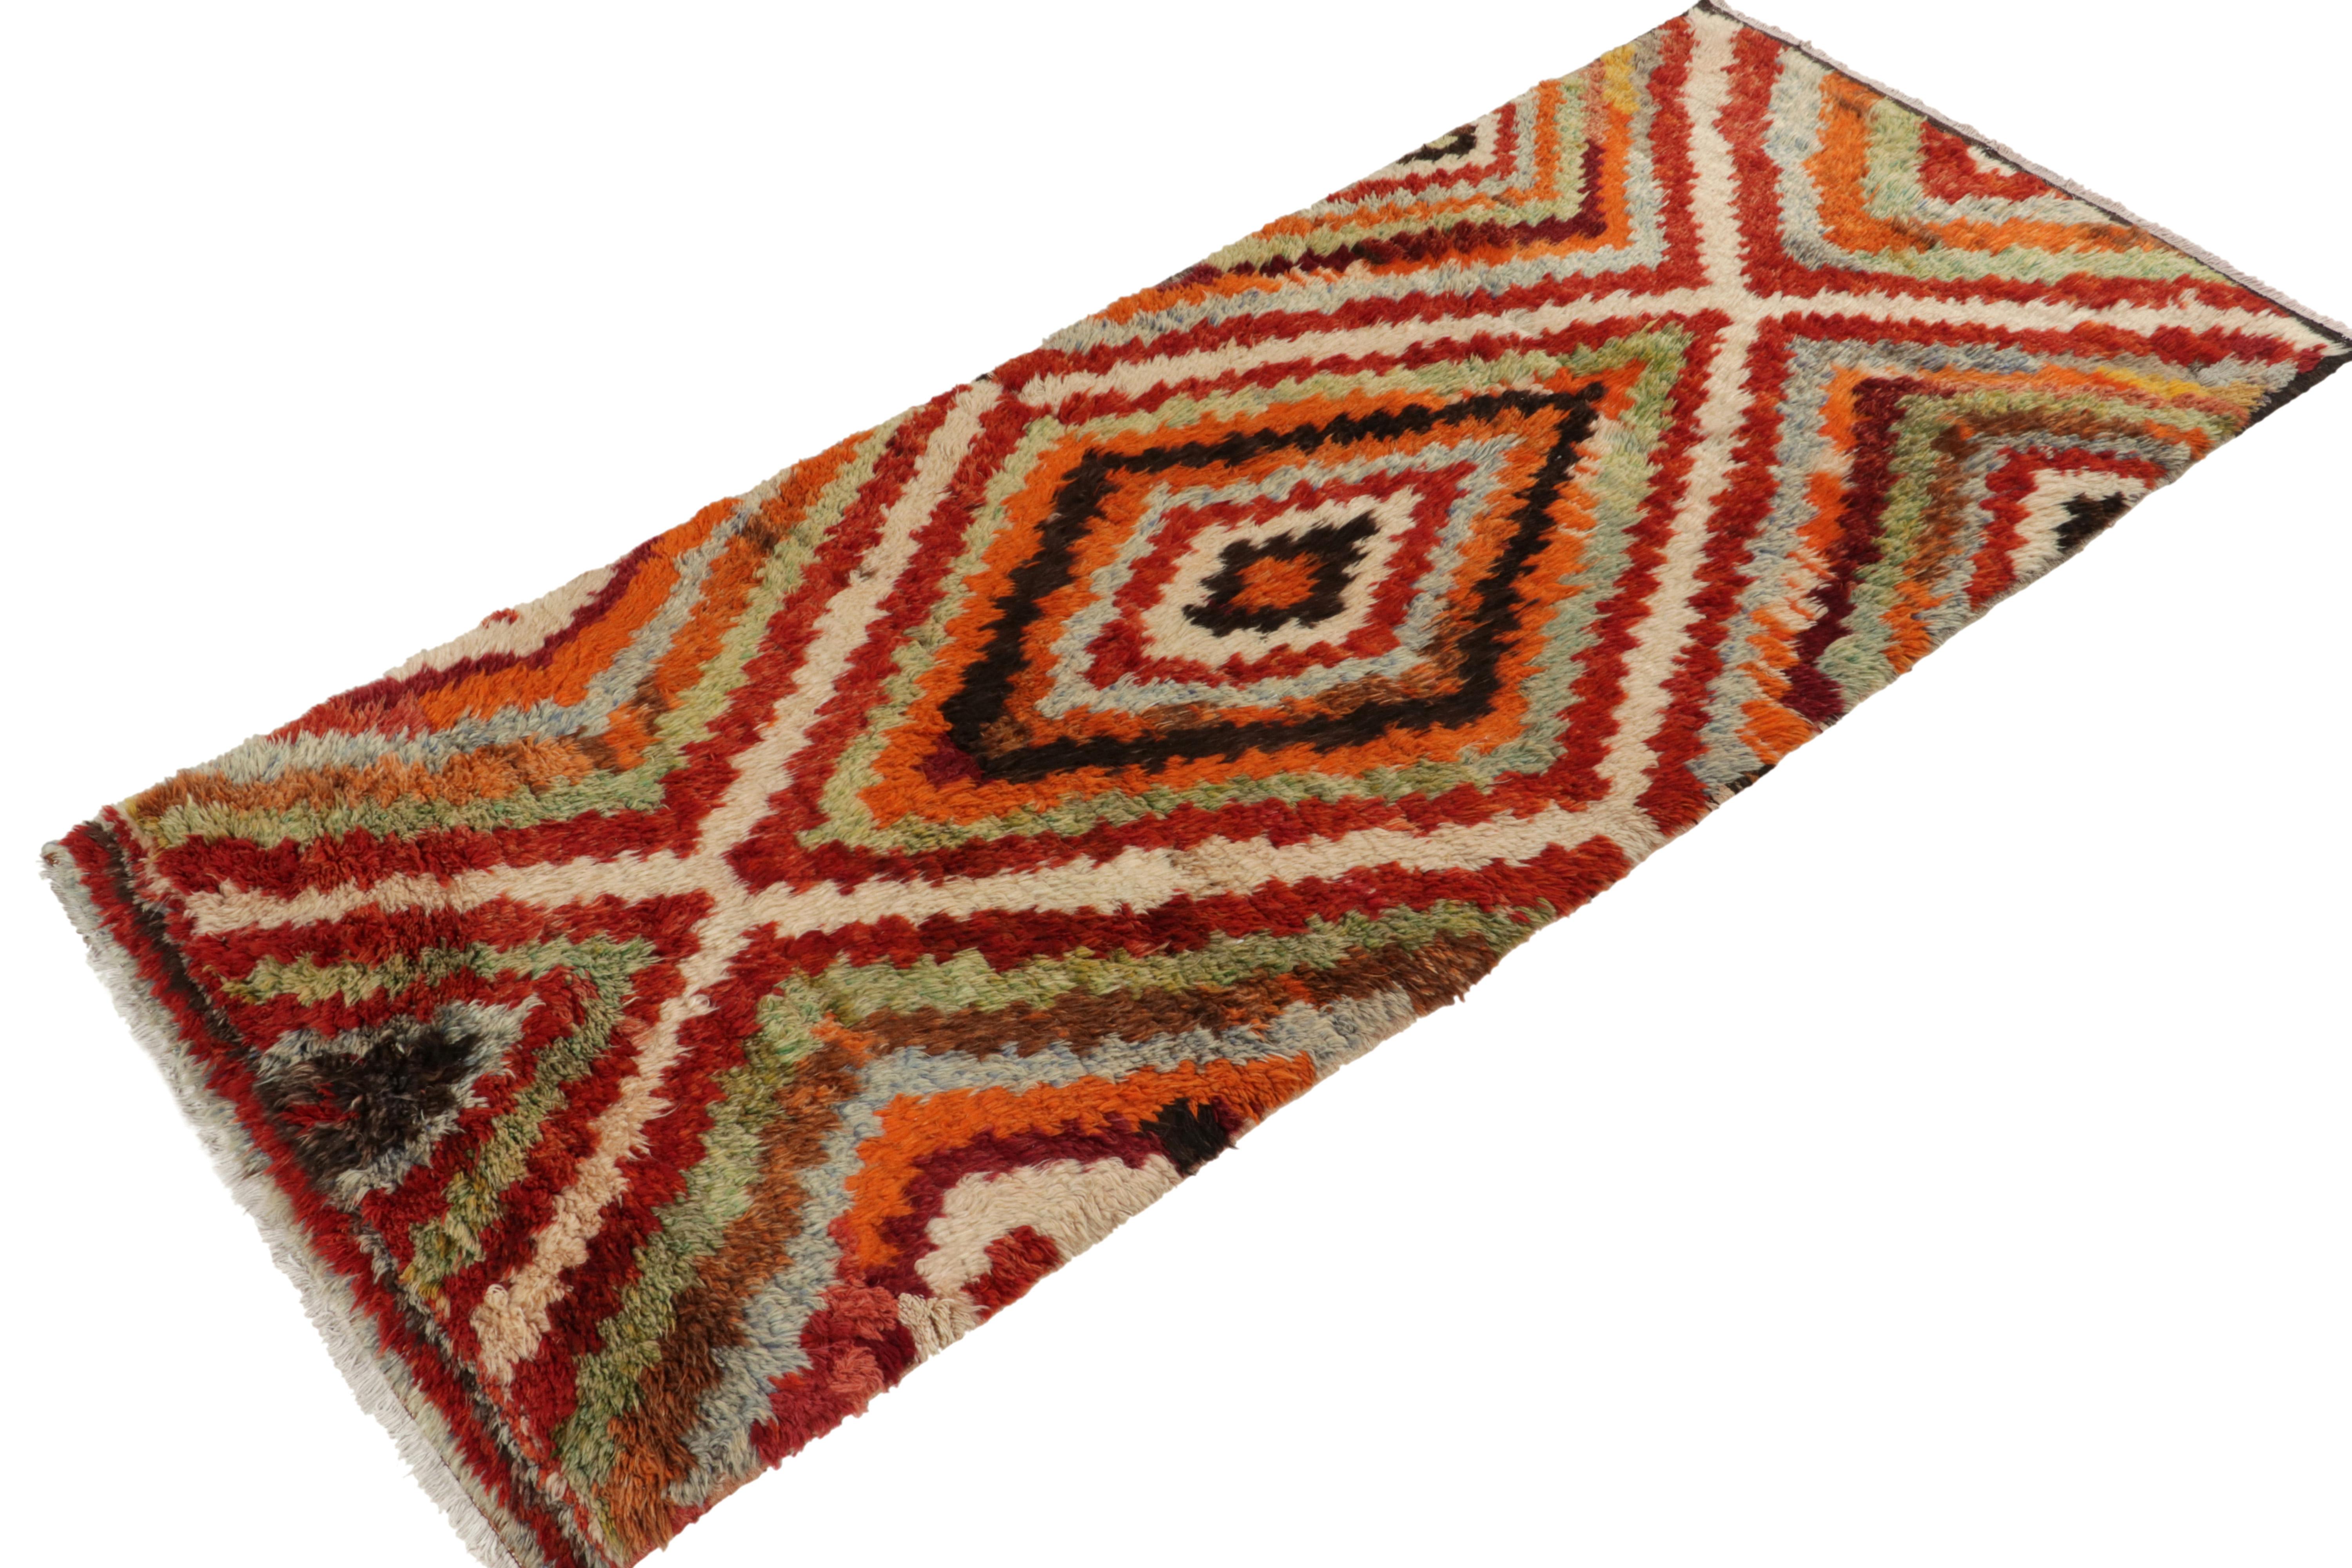 Tribal 1950s Vintage Tulu Rug in Orange, Red, Green Geometric Pattern by Rug & Kilim For Sale